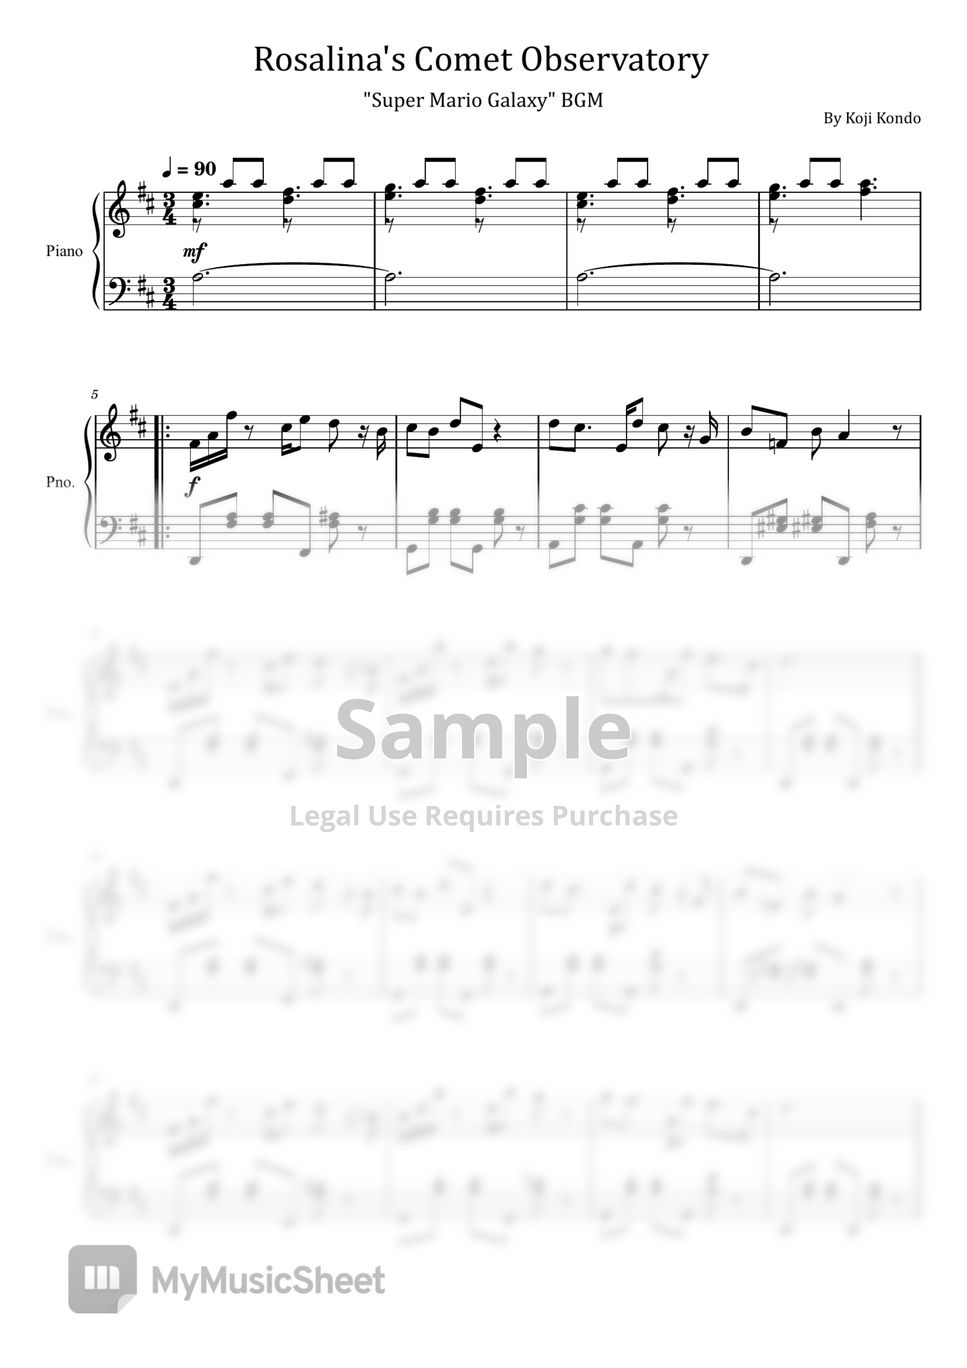 Super Mario Galaxy - Rosalina's Comet Observatory ("Super Mario Galaxy" BGM - For Piano Solo) by poon